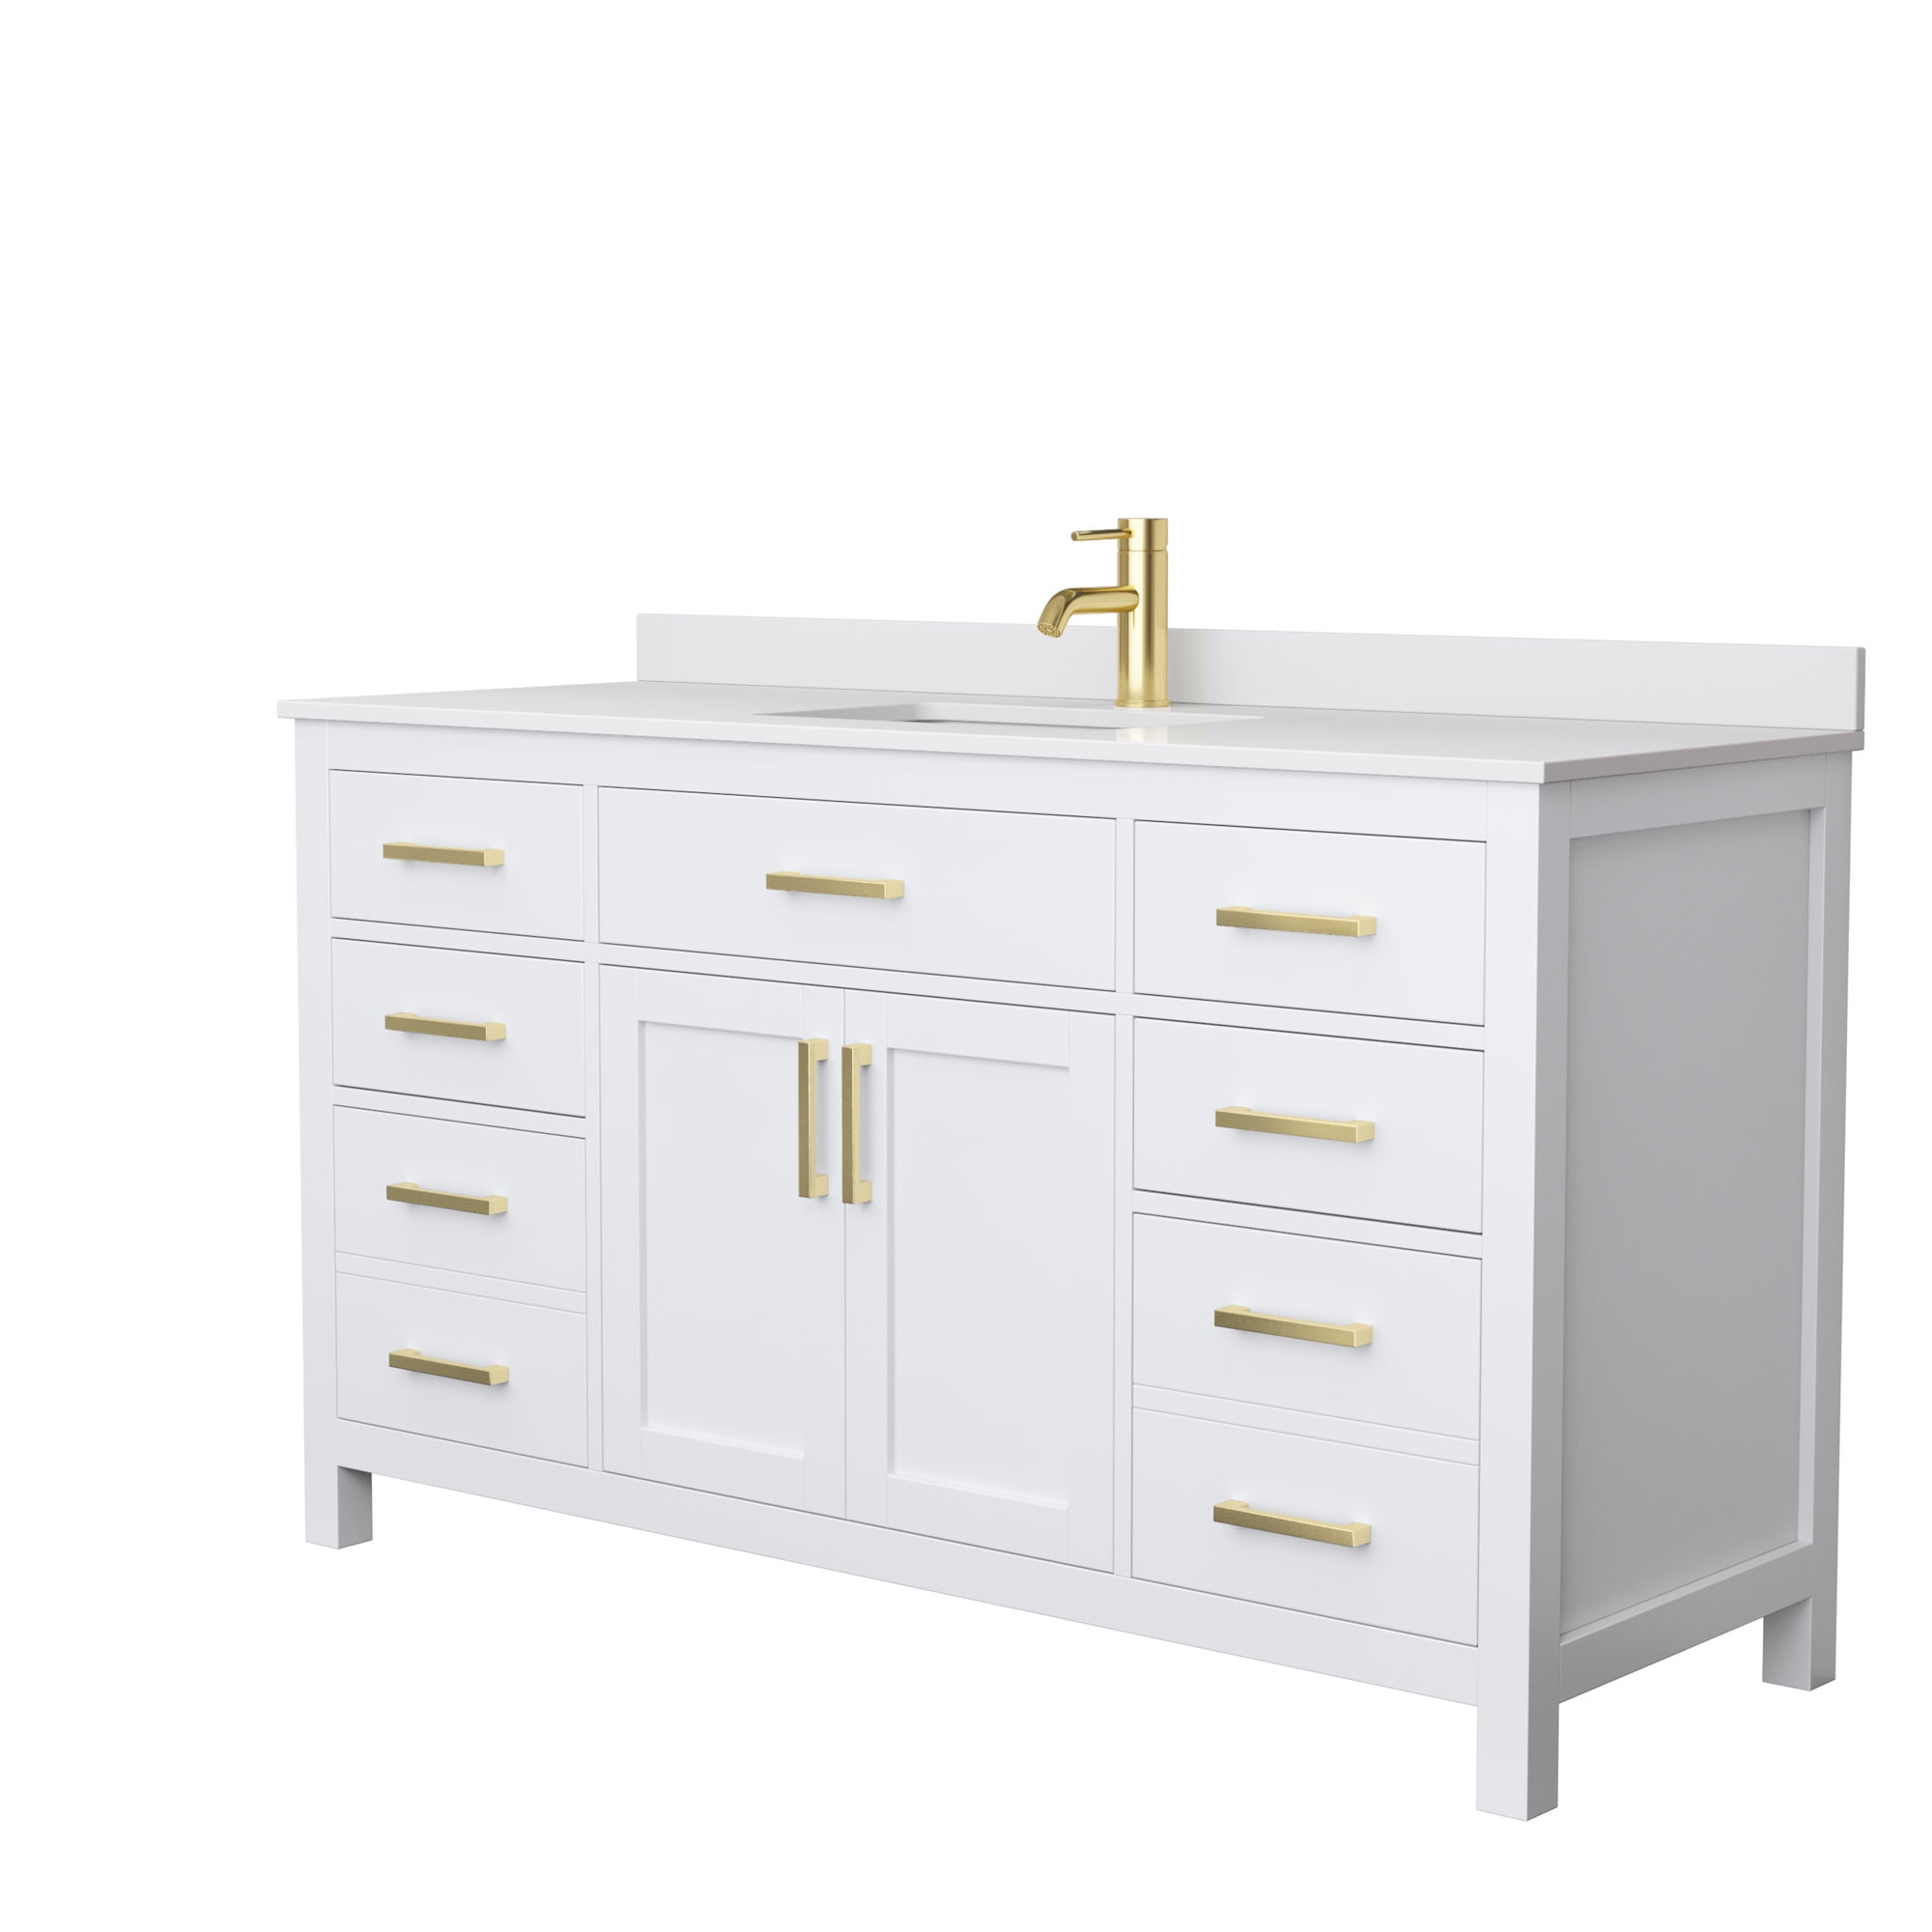 Details about   3 Drawers Bathroom Vanity MDF Storage Cabinet Stand Closet Black/White Dresser 